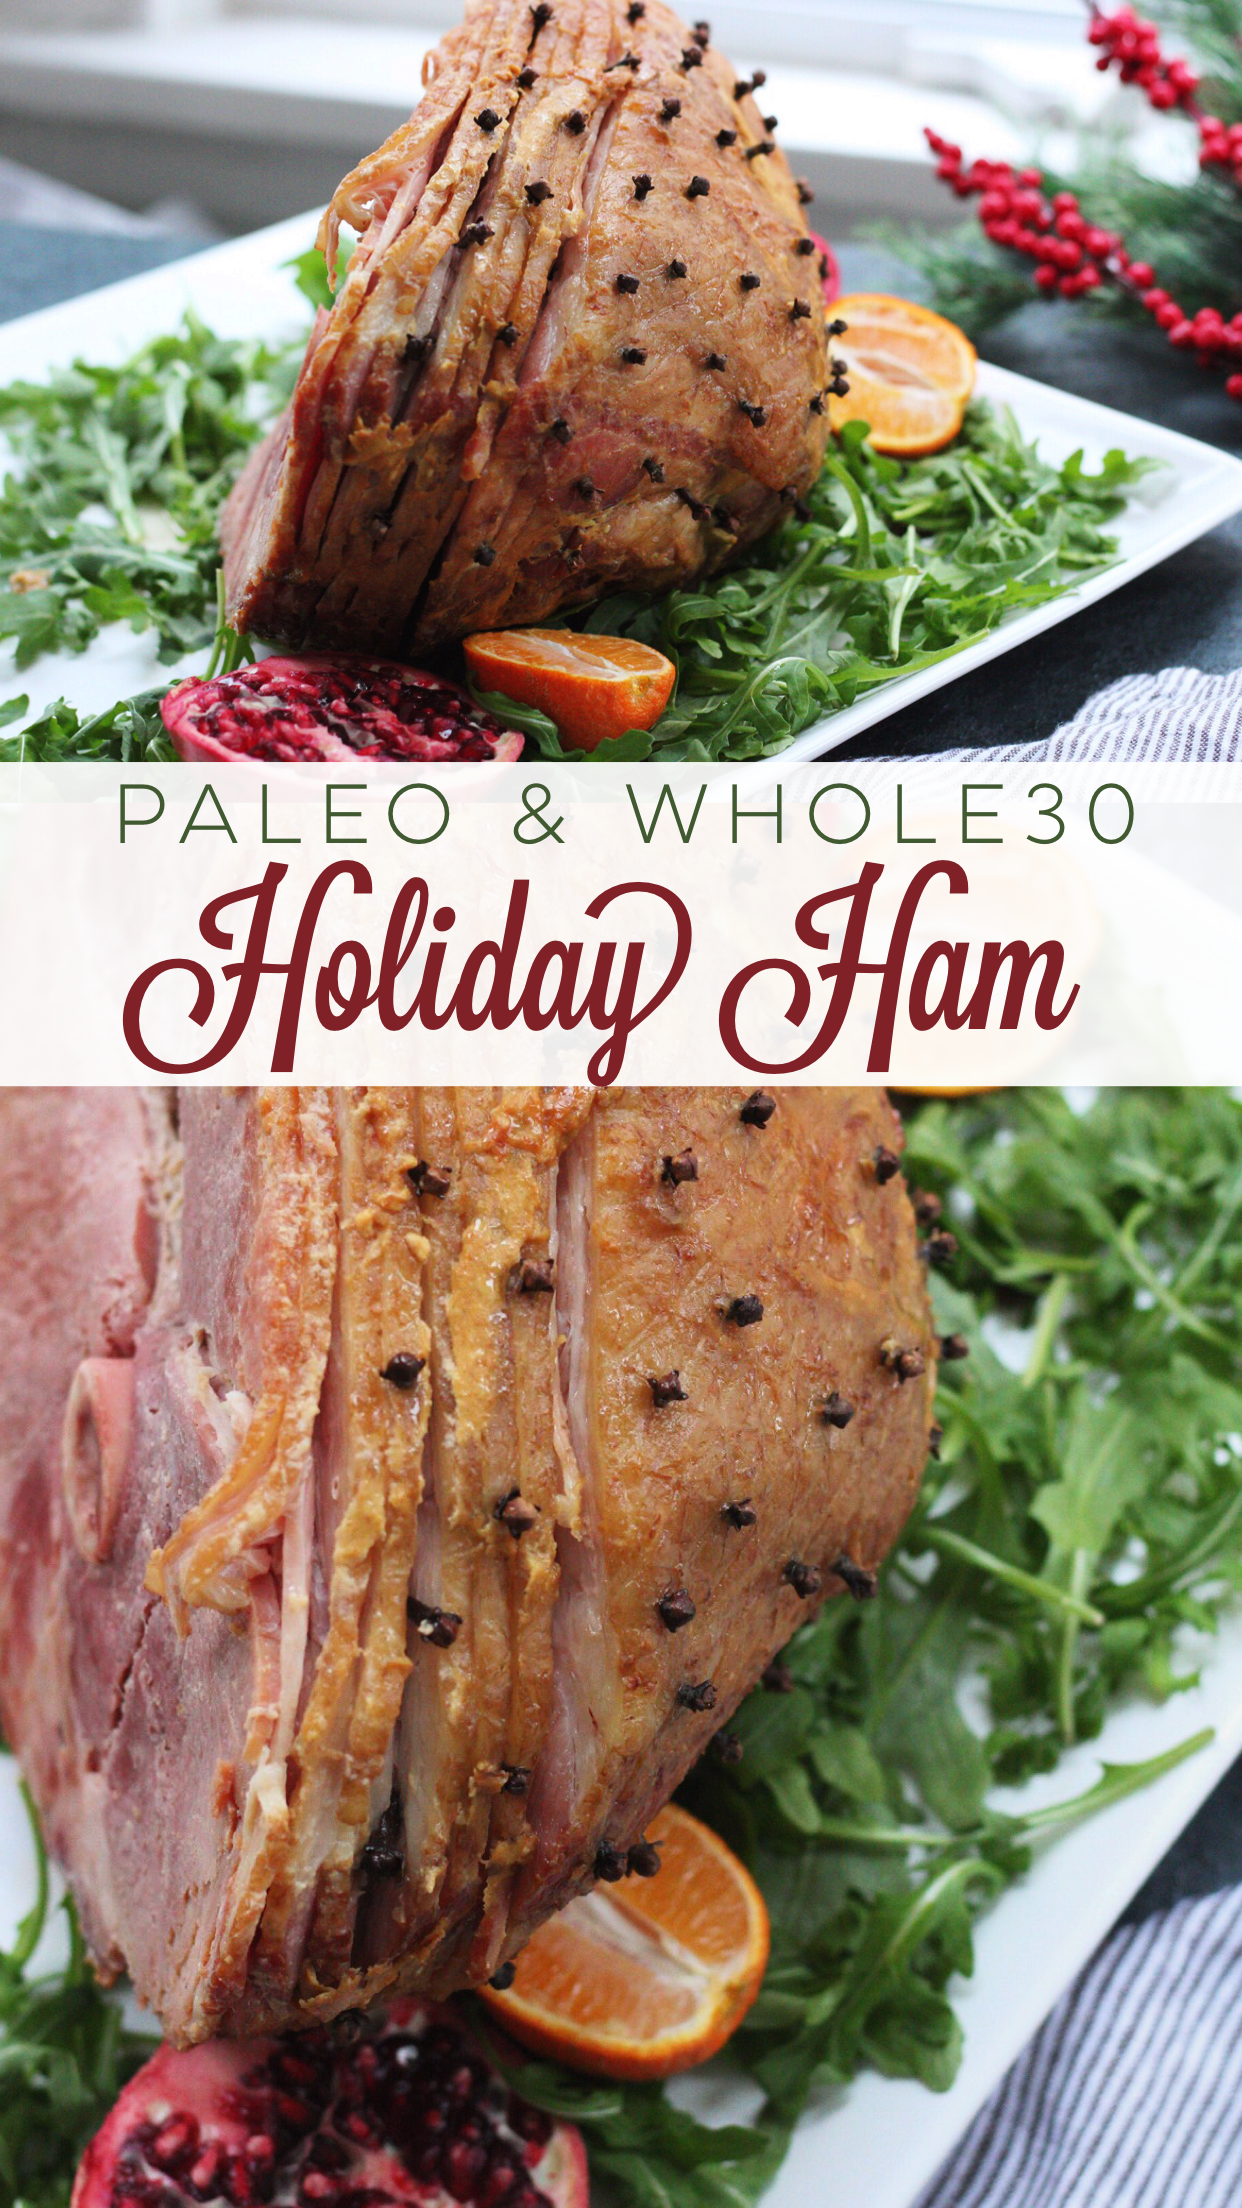 Whole30 Holiday Ham: A Healthy Paleo Ham Recipe! - Whole Kitchen Sink